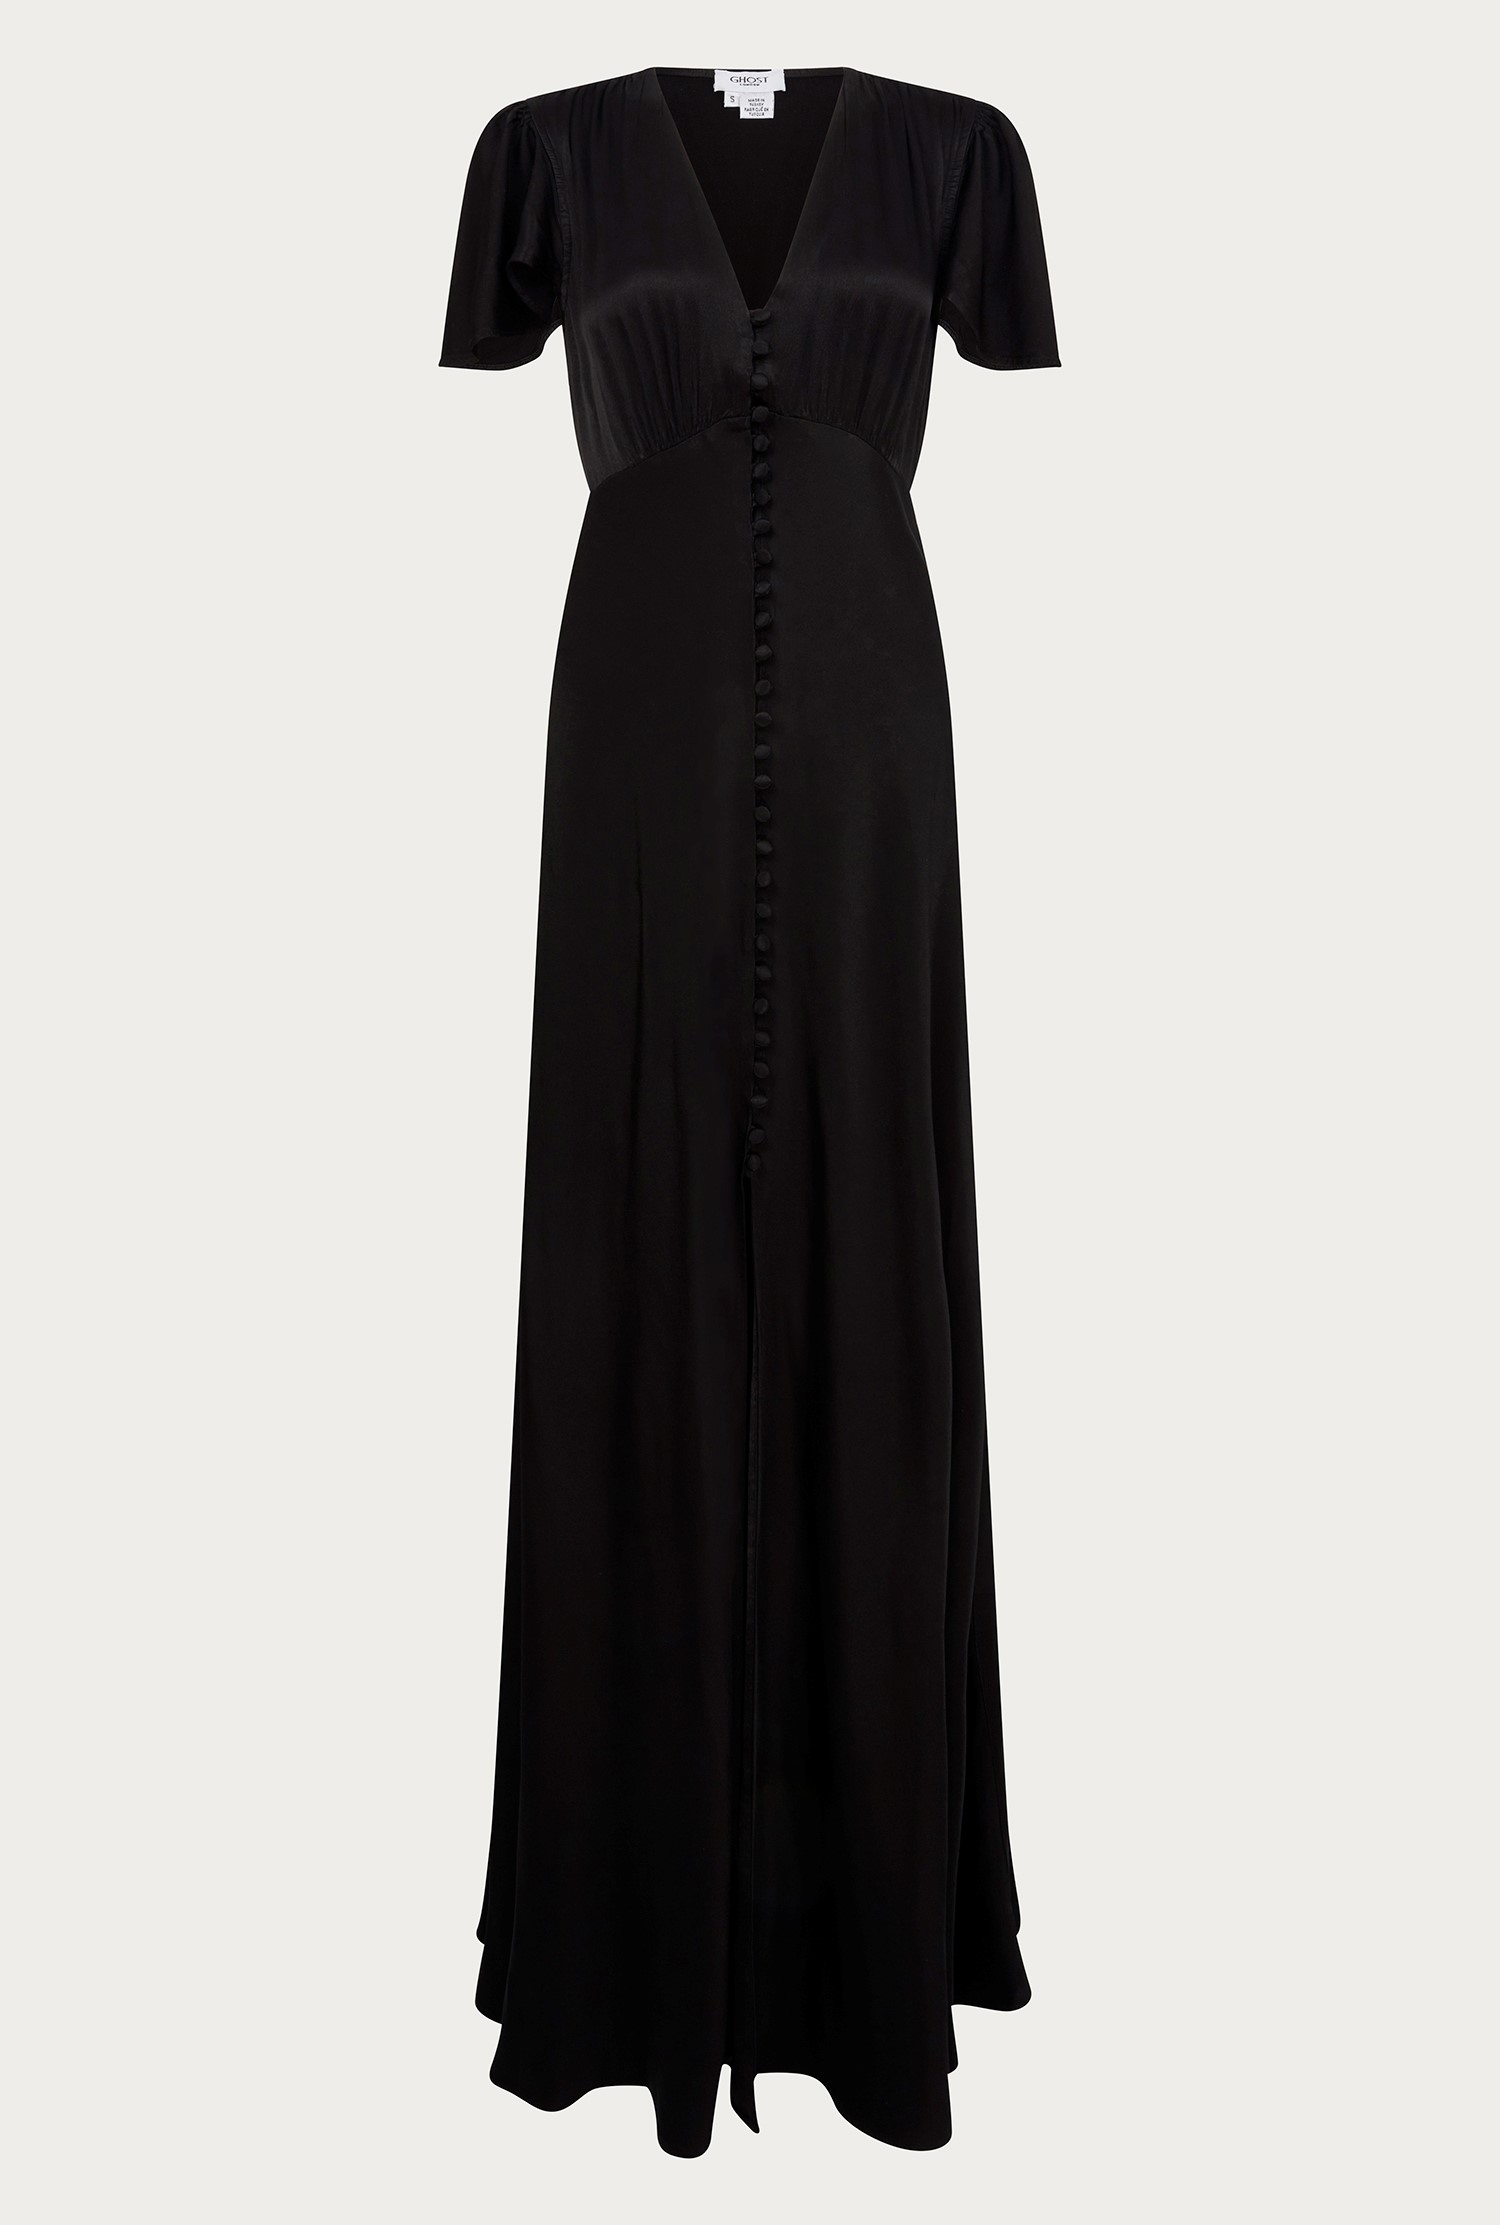 Delphine Black Satin Maxi Dress | Ghost London